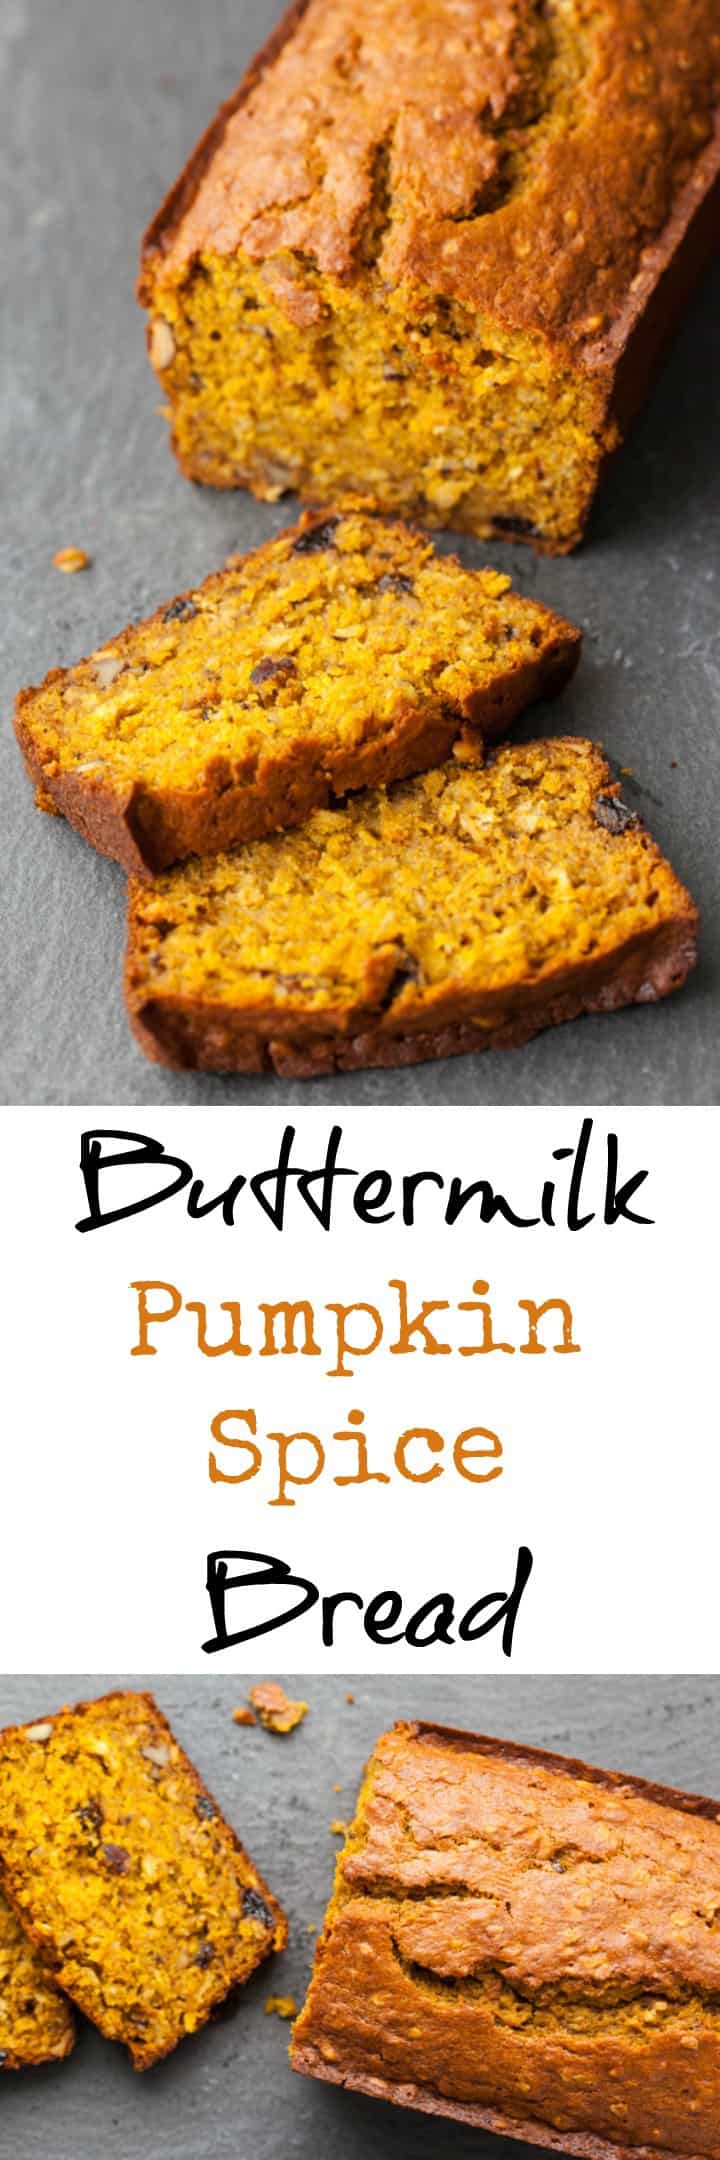 Buttermilk Pumpkin Spice Bread Recipe | pinchmysalt.com